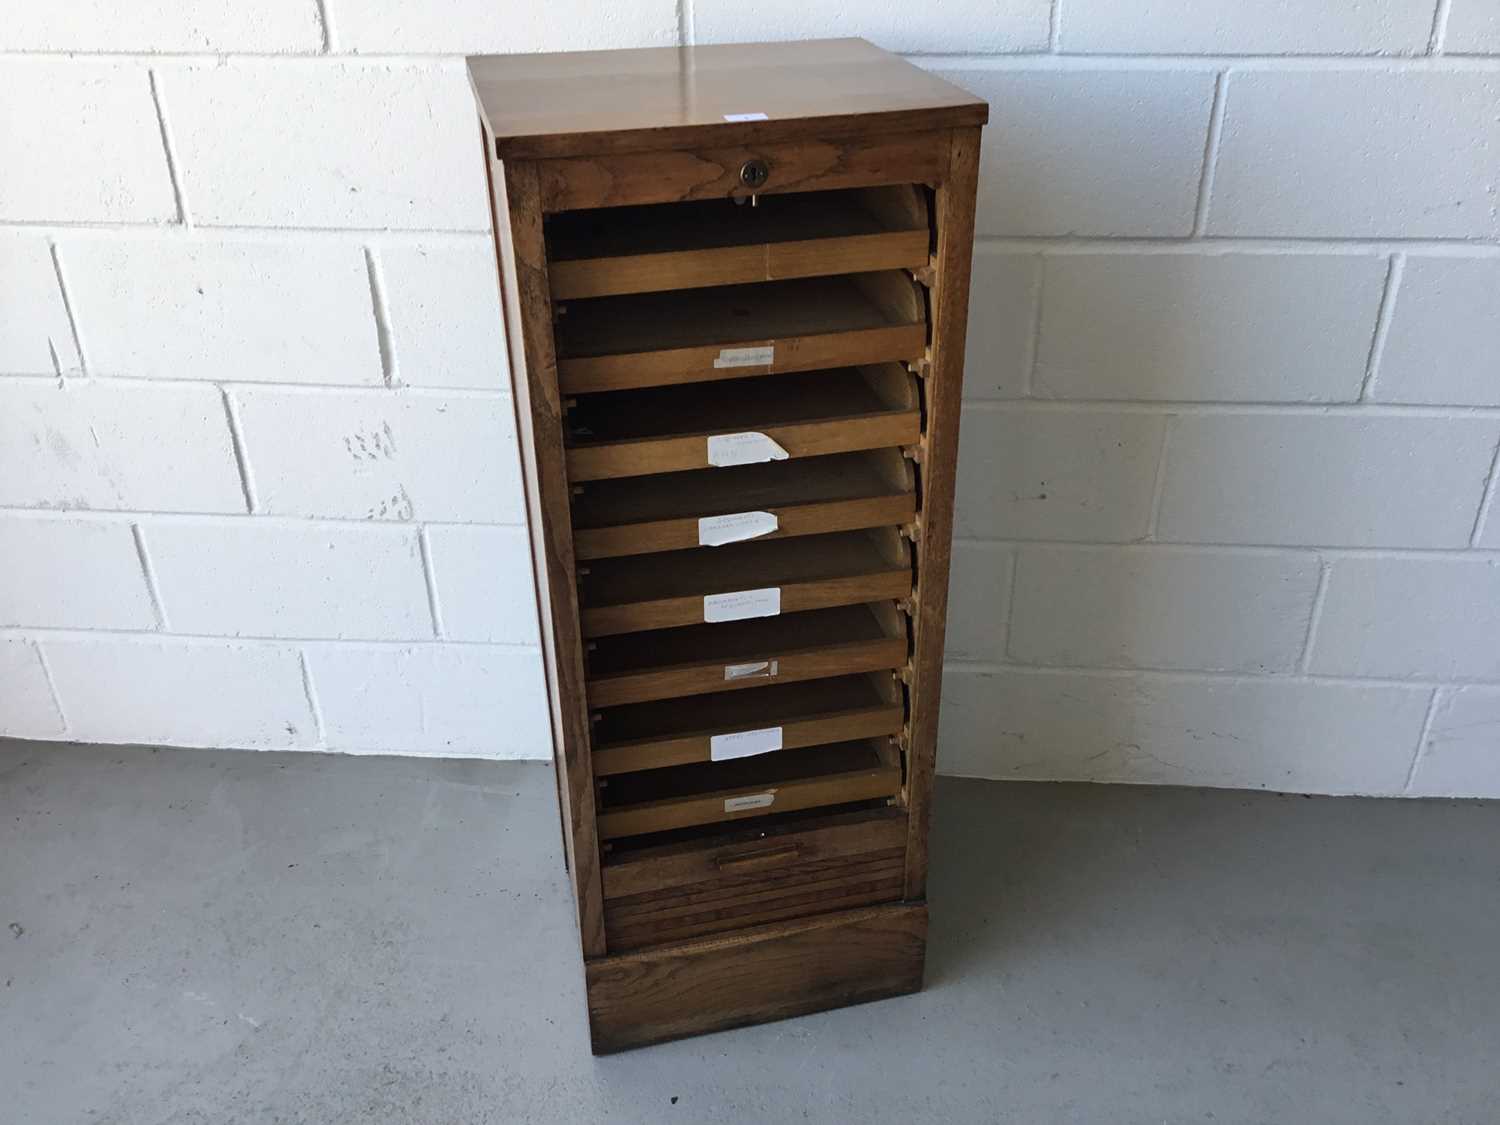 Edwardian oak stationary / filing cabinet with nine sliding shelves, enclosed by tambour shutter doo